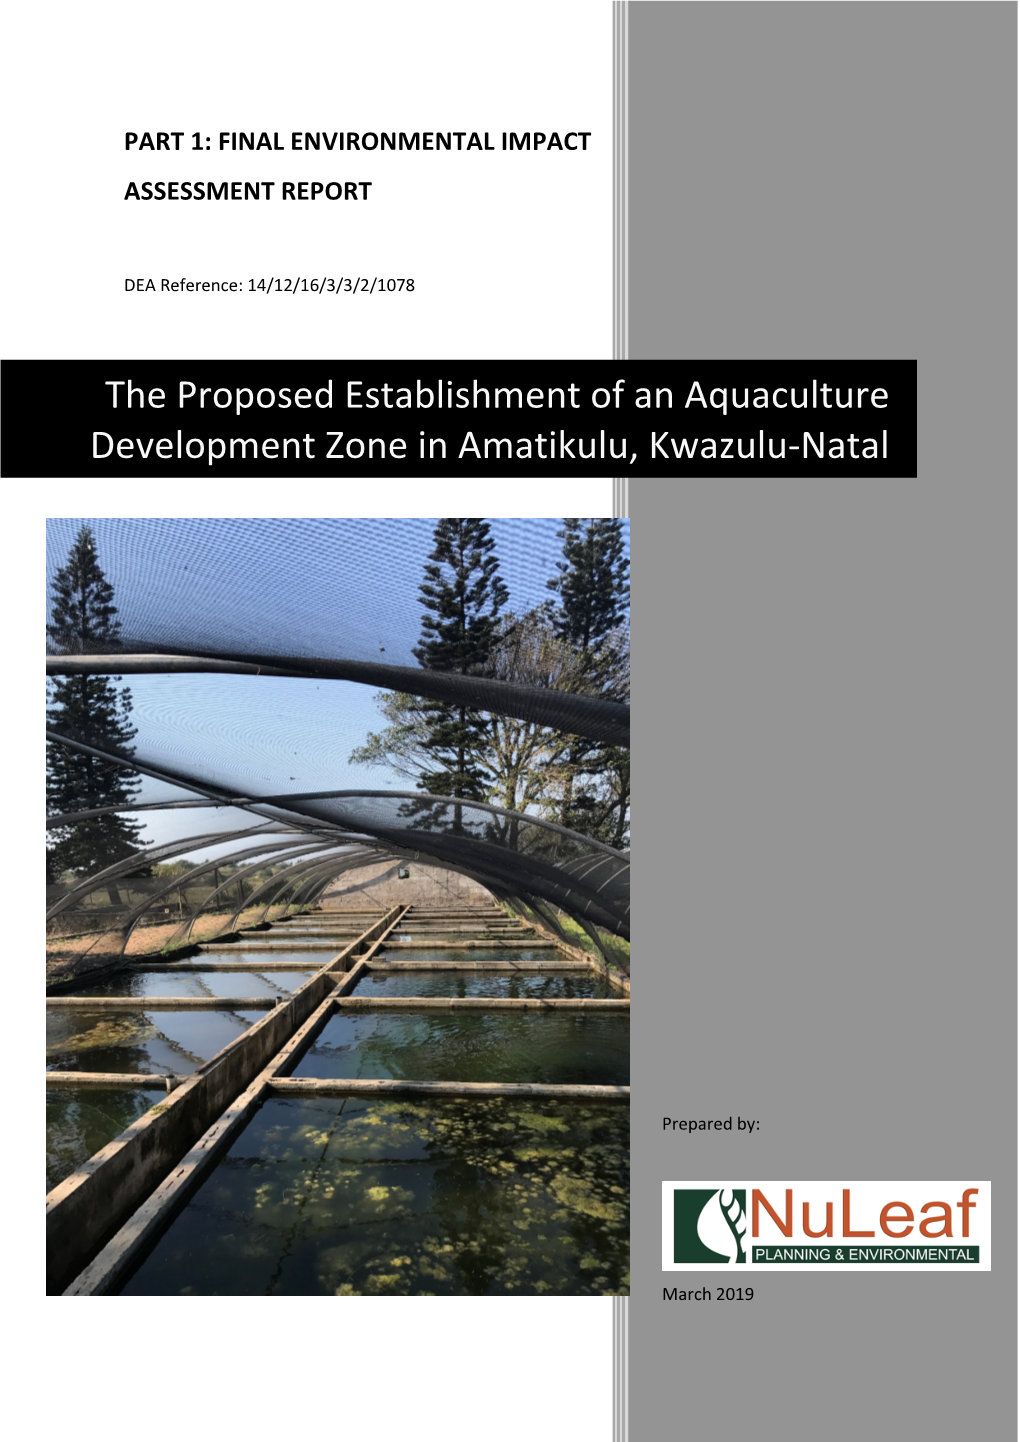 The Proposed Establishment of an Aquaculture Development Zone in Amatikulu, Kwazulu-Natal